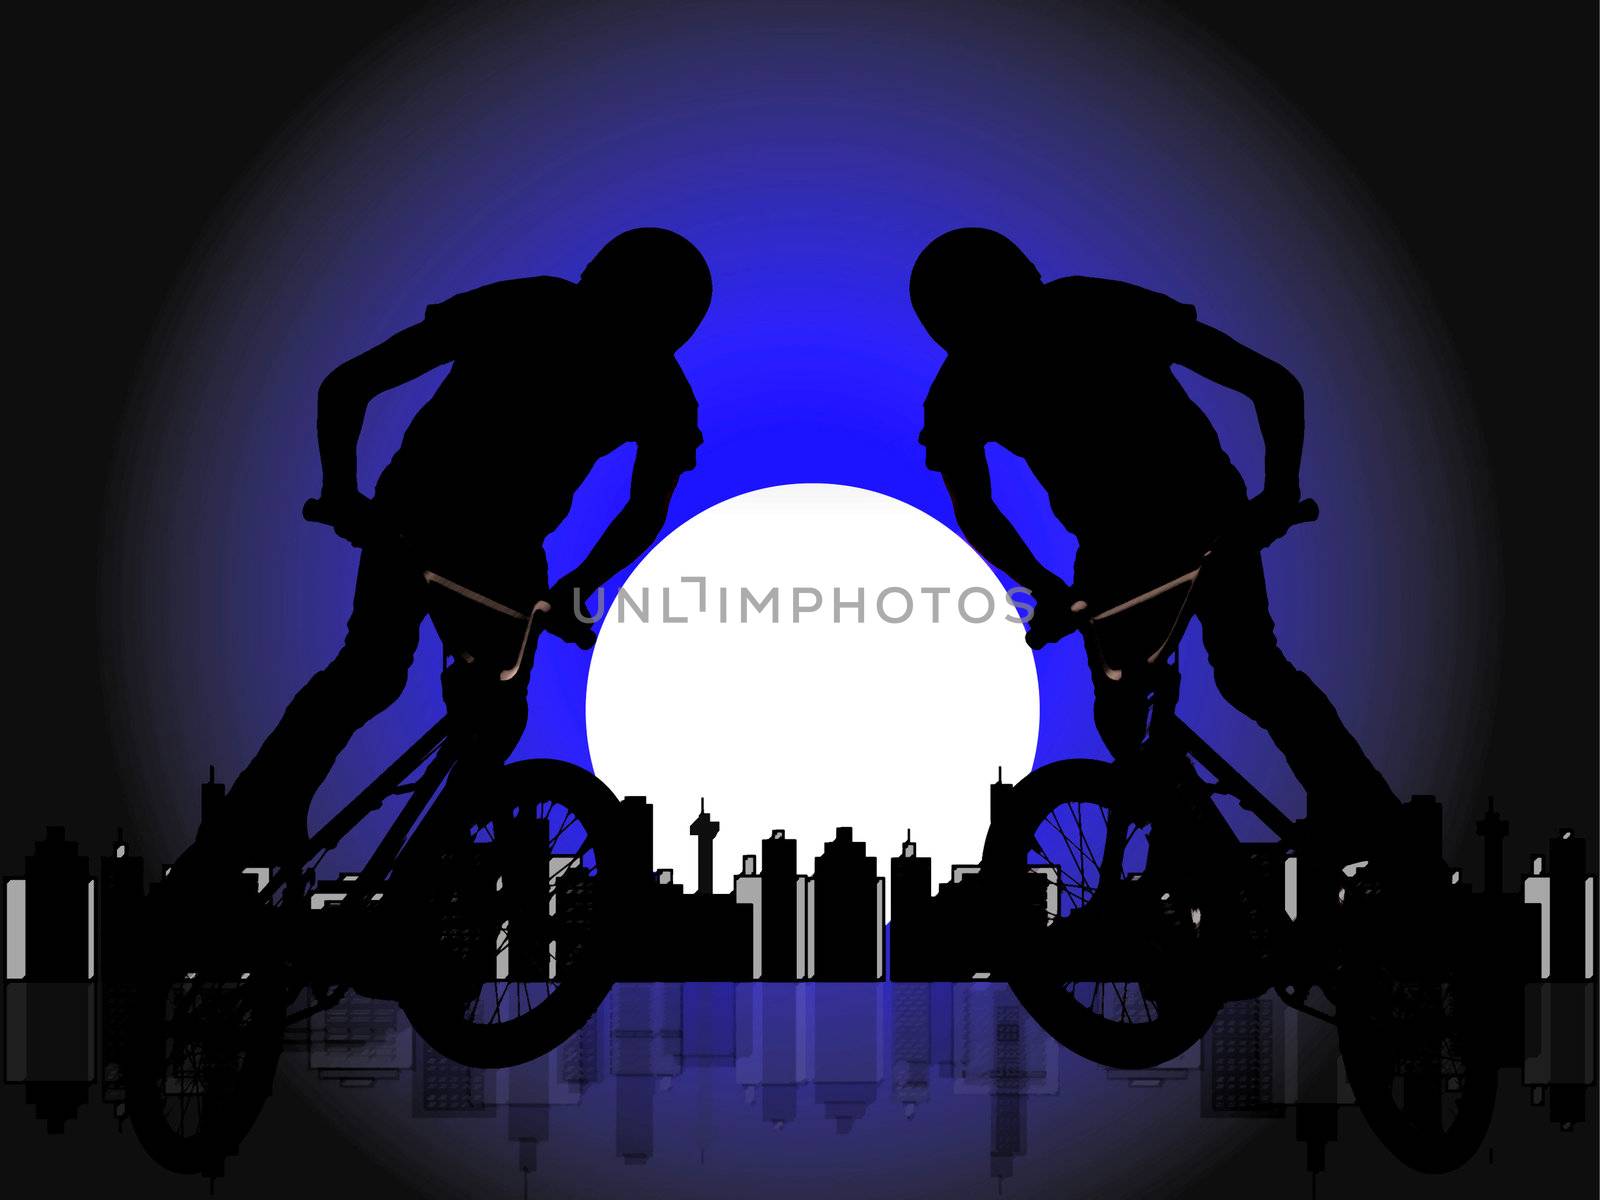 Silhouette of biker boy on cityscape illustration